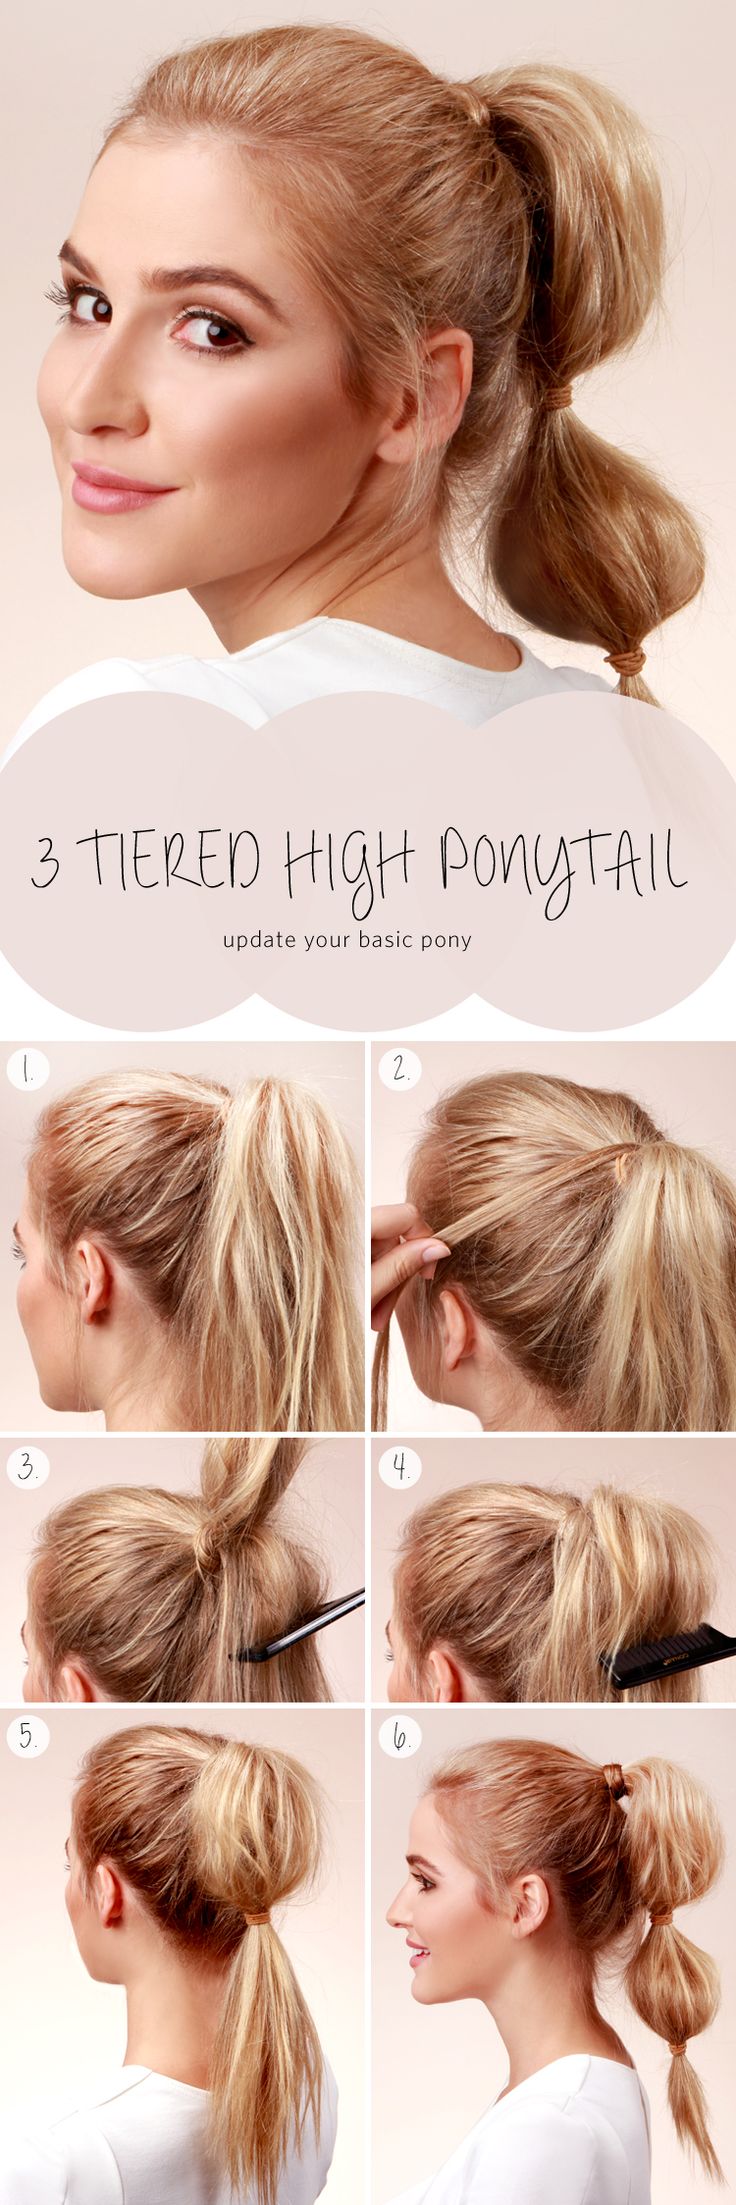 Cut ponytail